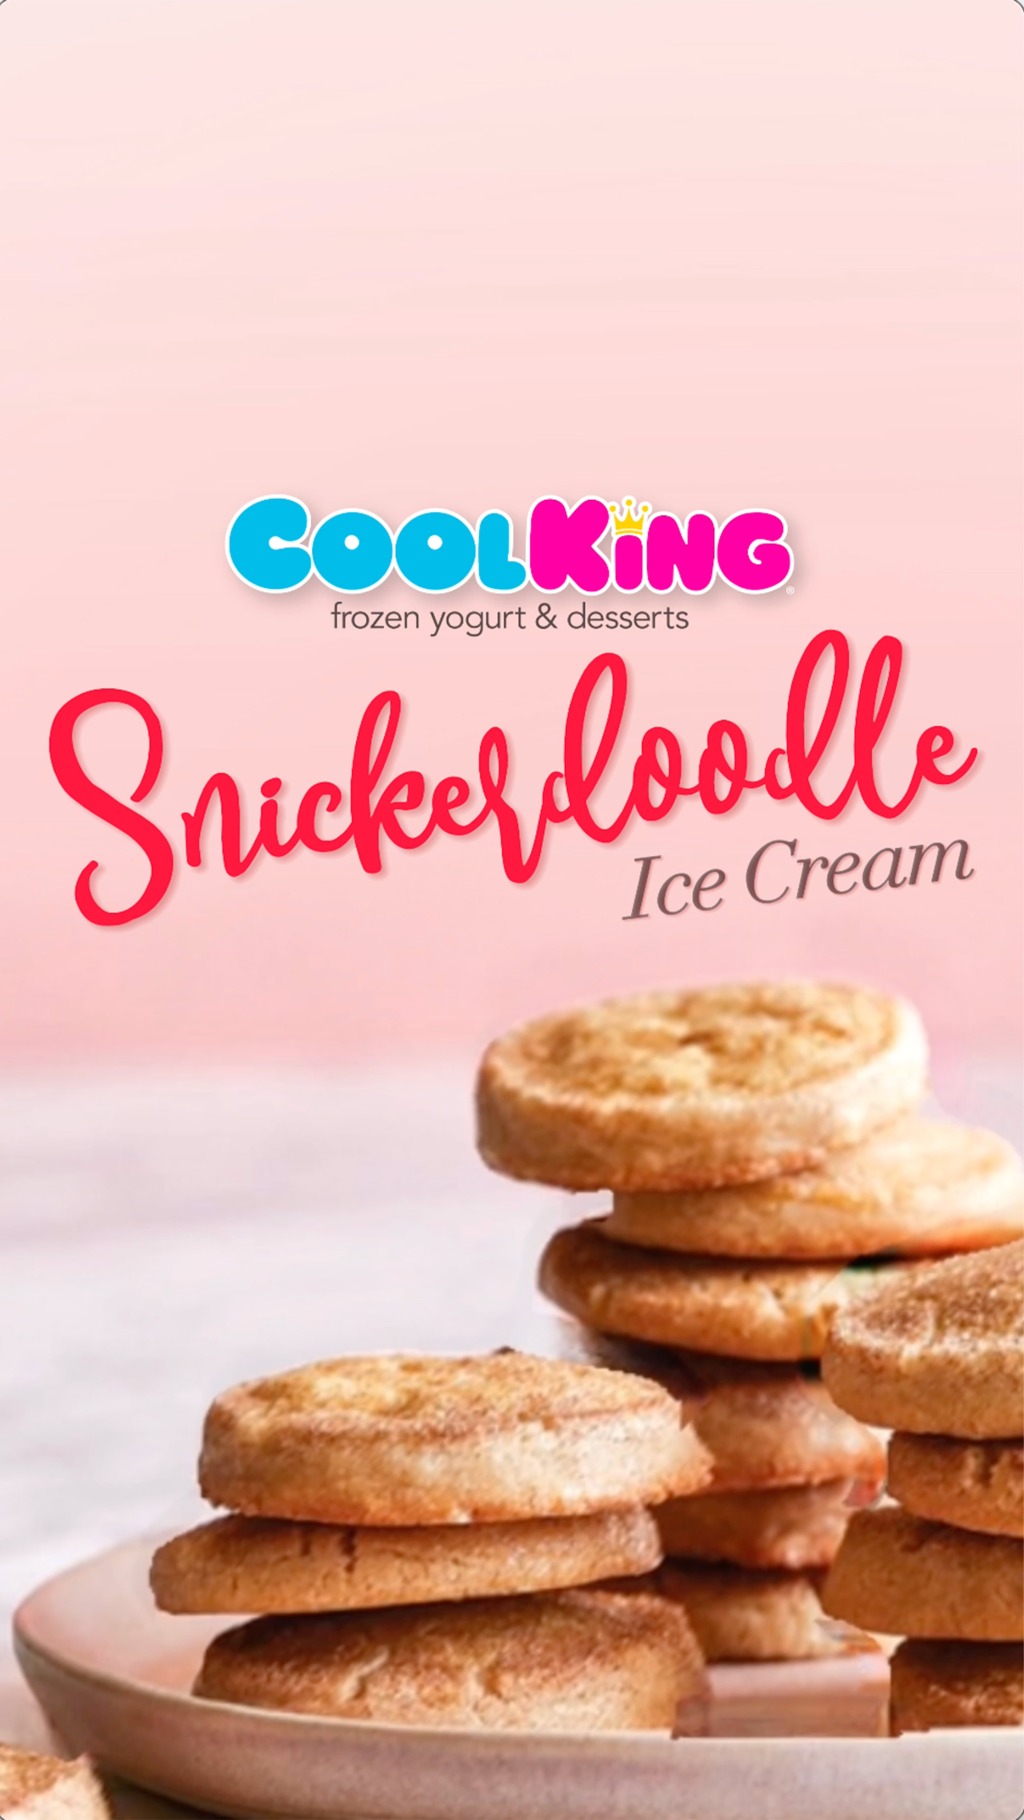 Cool King® “Snickerdoodle Ice Cream” Advertisement